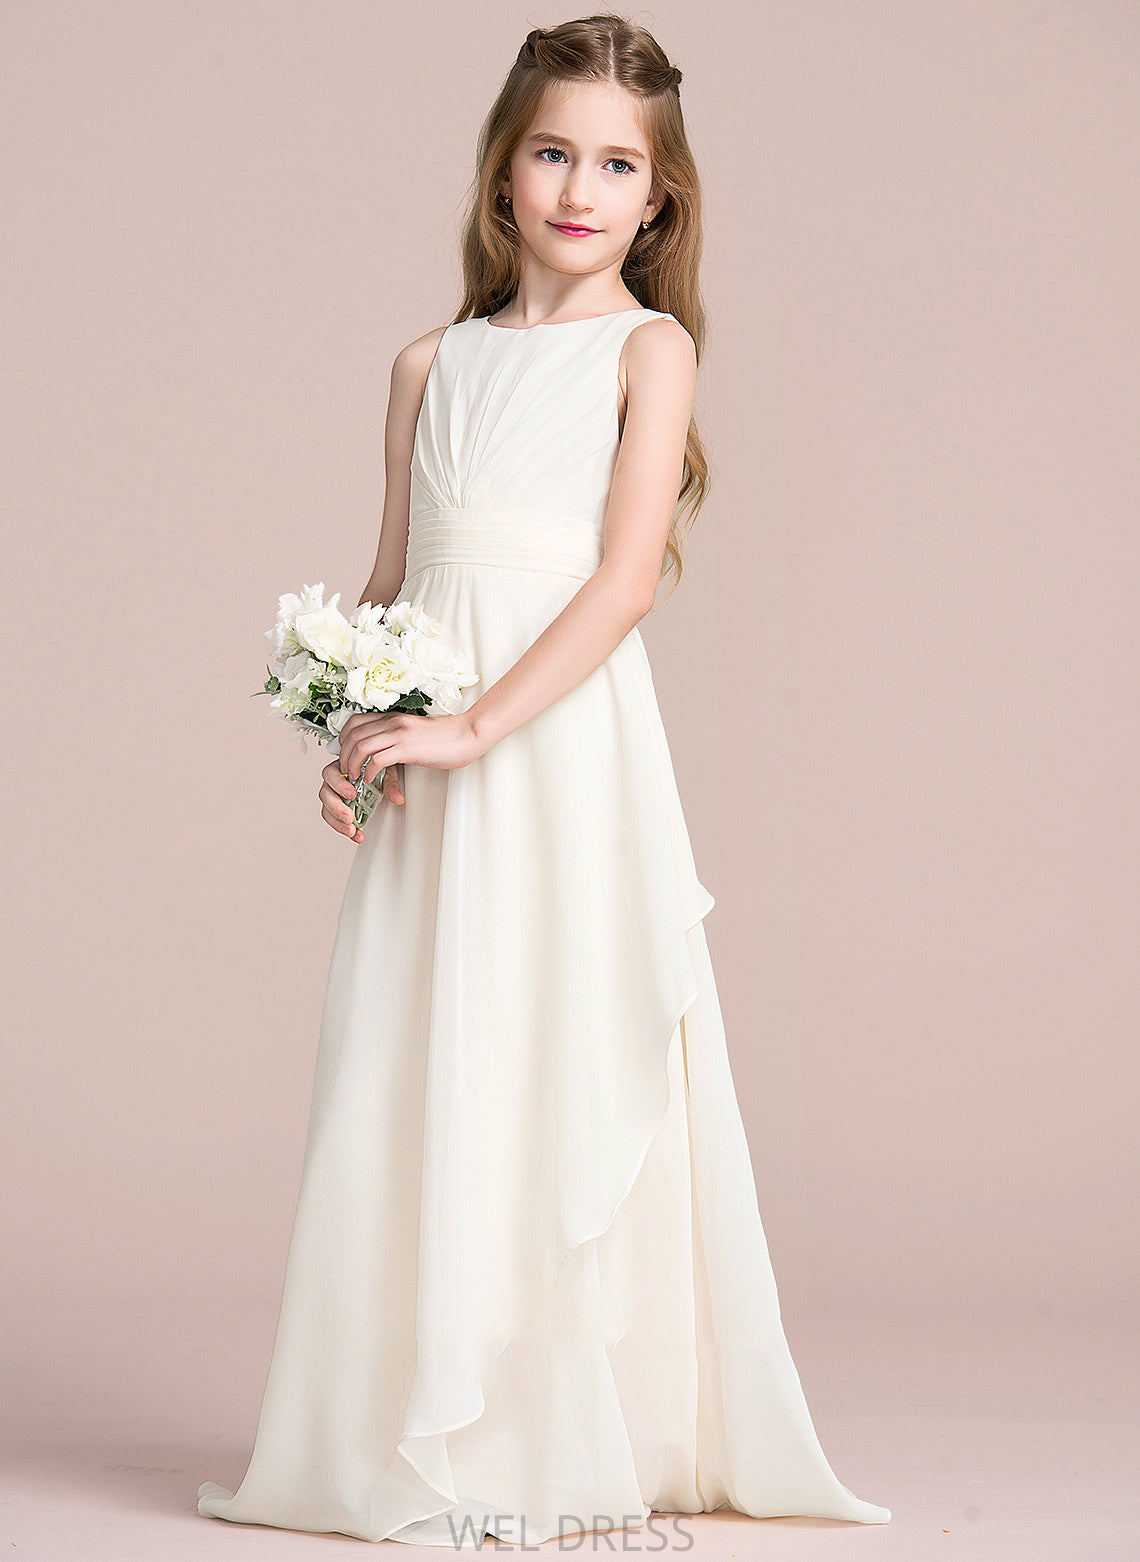 Scoop Junior Bridesmaid Dresses Ruffles Floor-Length Neck With Emelia A-Line Cascading Chiffon